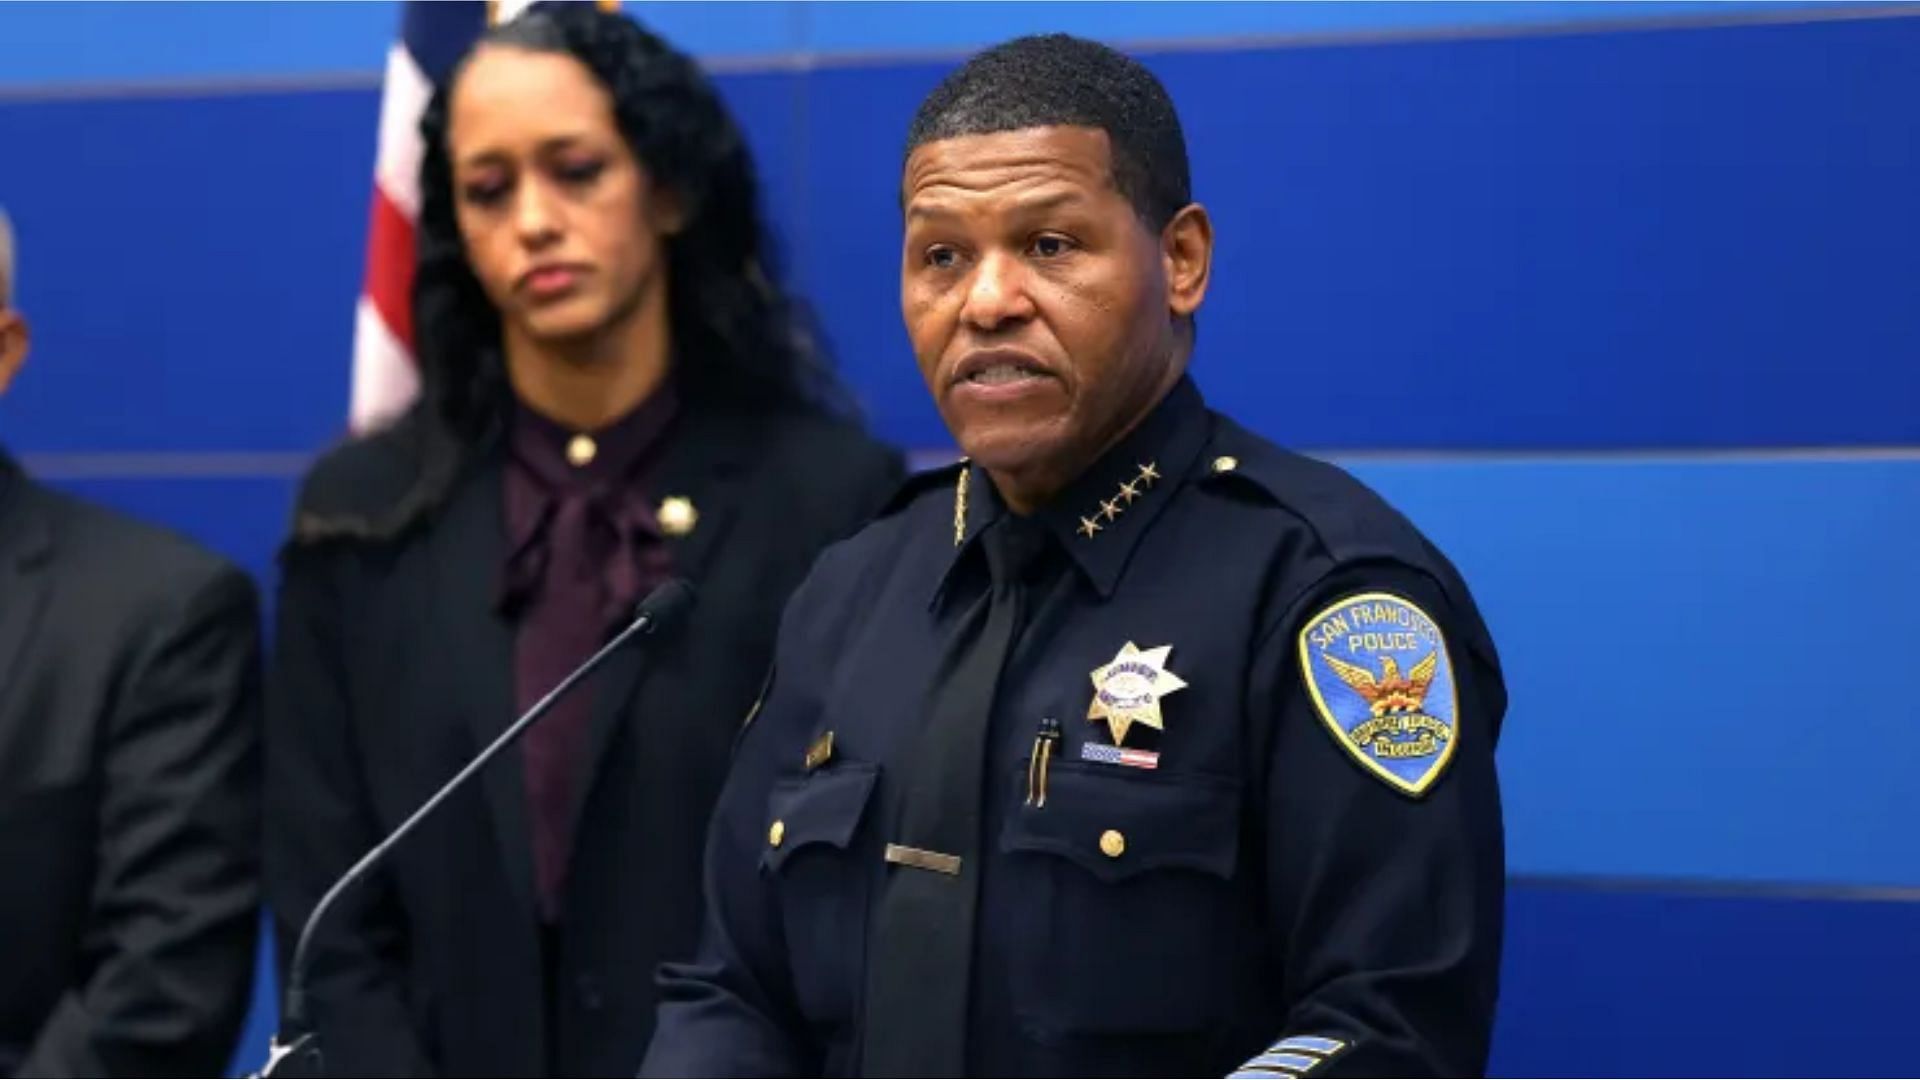 San Francisco Police Chief William Scott at the press conference on Friday (image via Getty/Justin Sullivan)